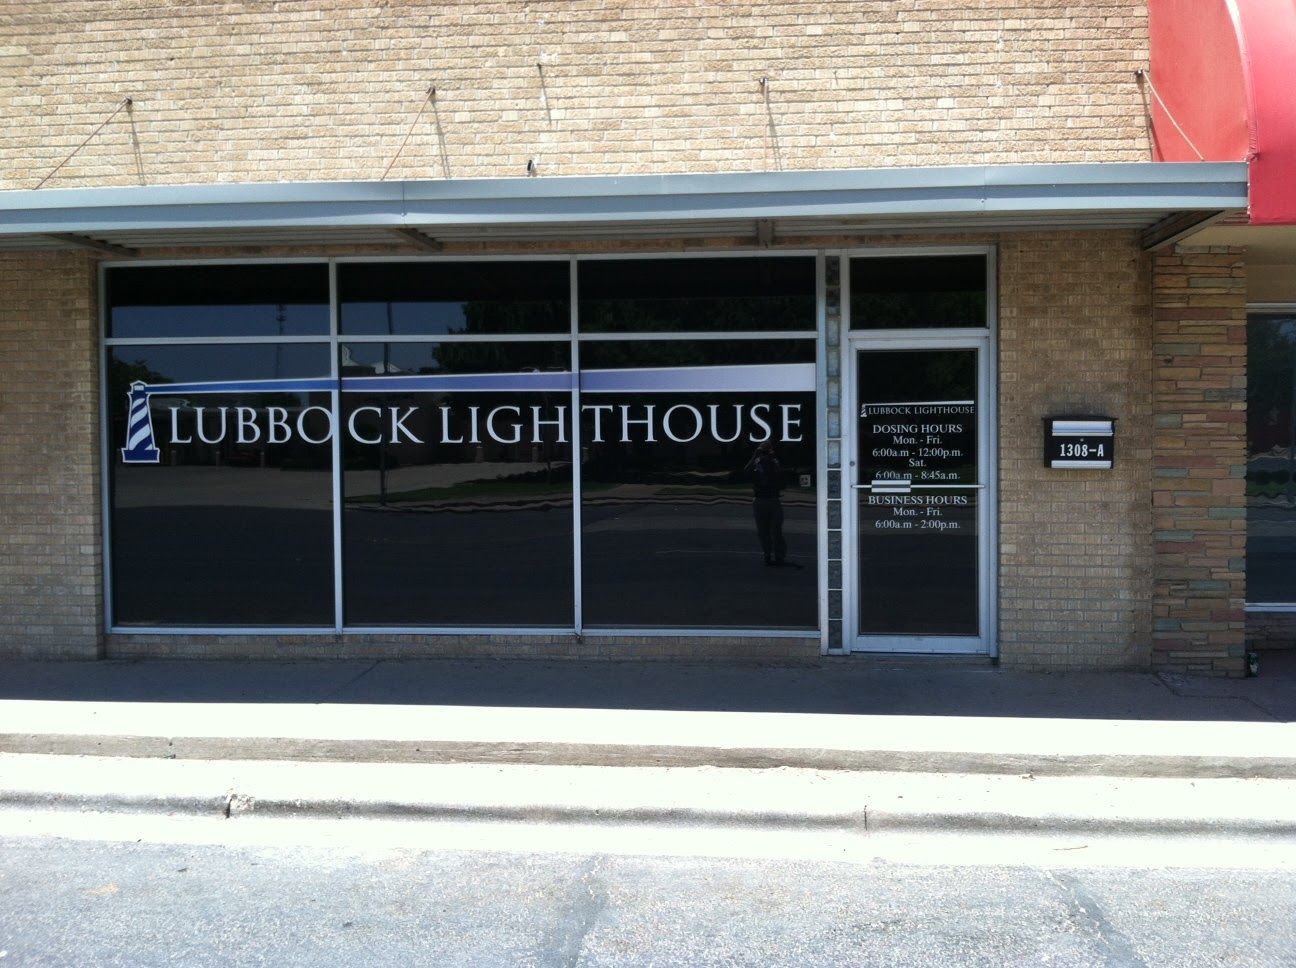 Lubbock Lighthouse